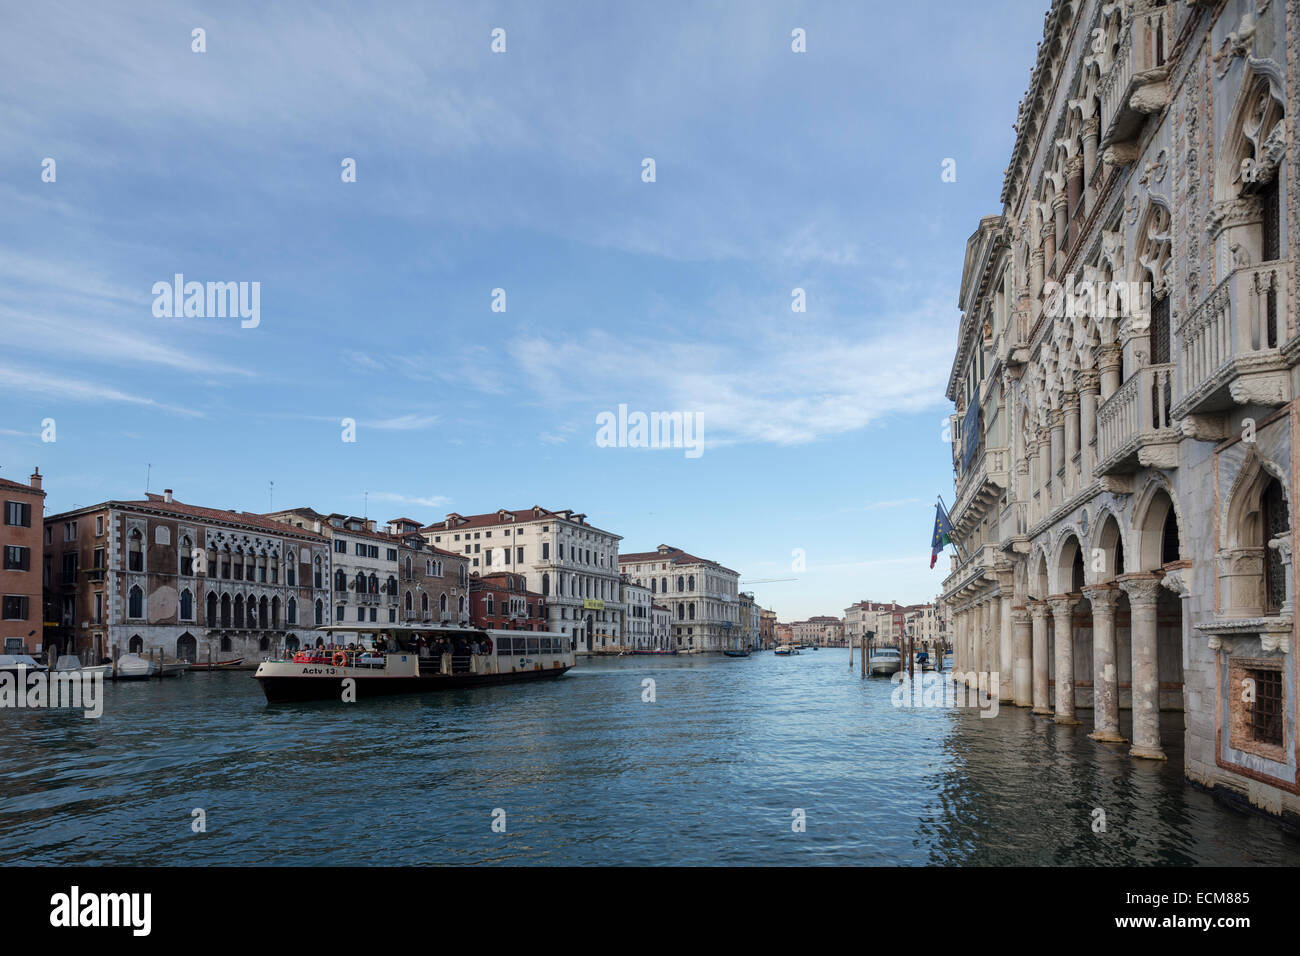 vaporetto on the Grand Canal near the Ca' d'Oro, Venice, Italy Stock Photo